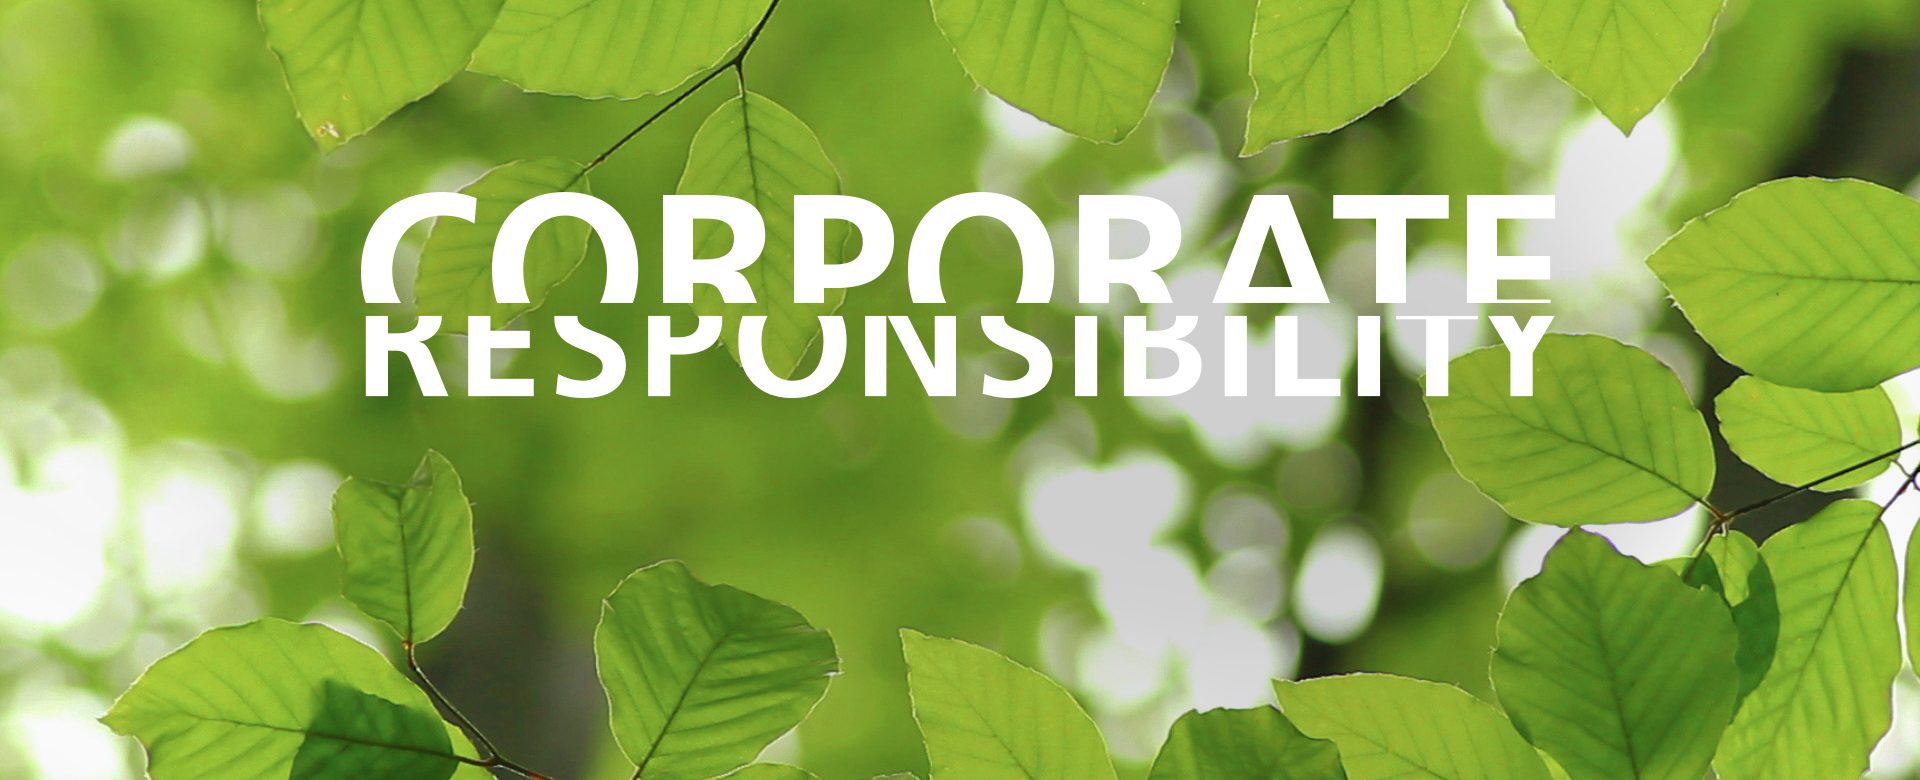 Corporate responsibility